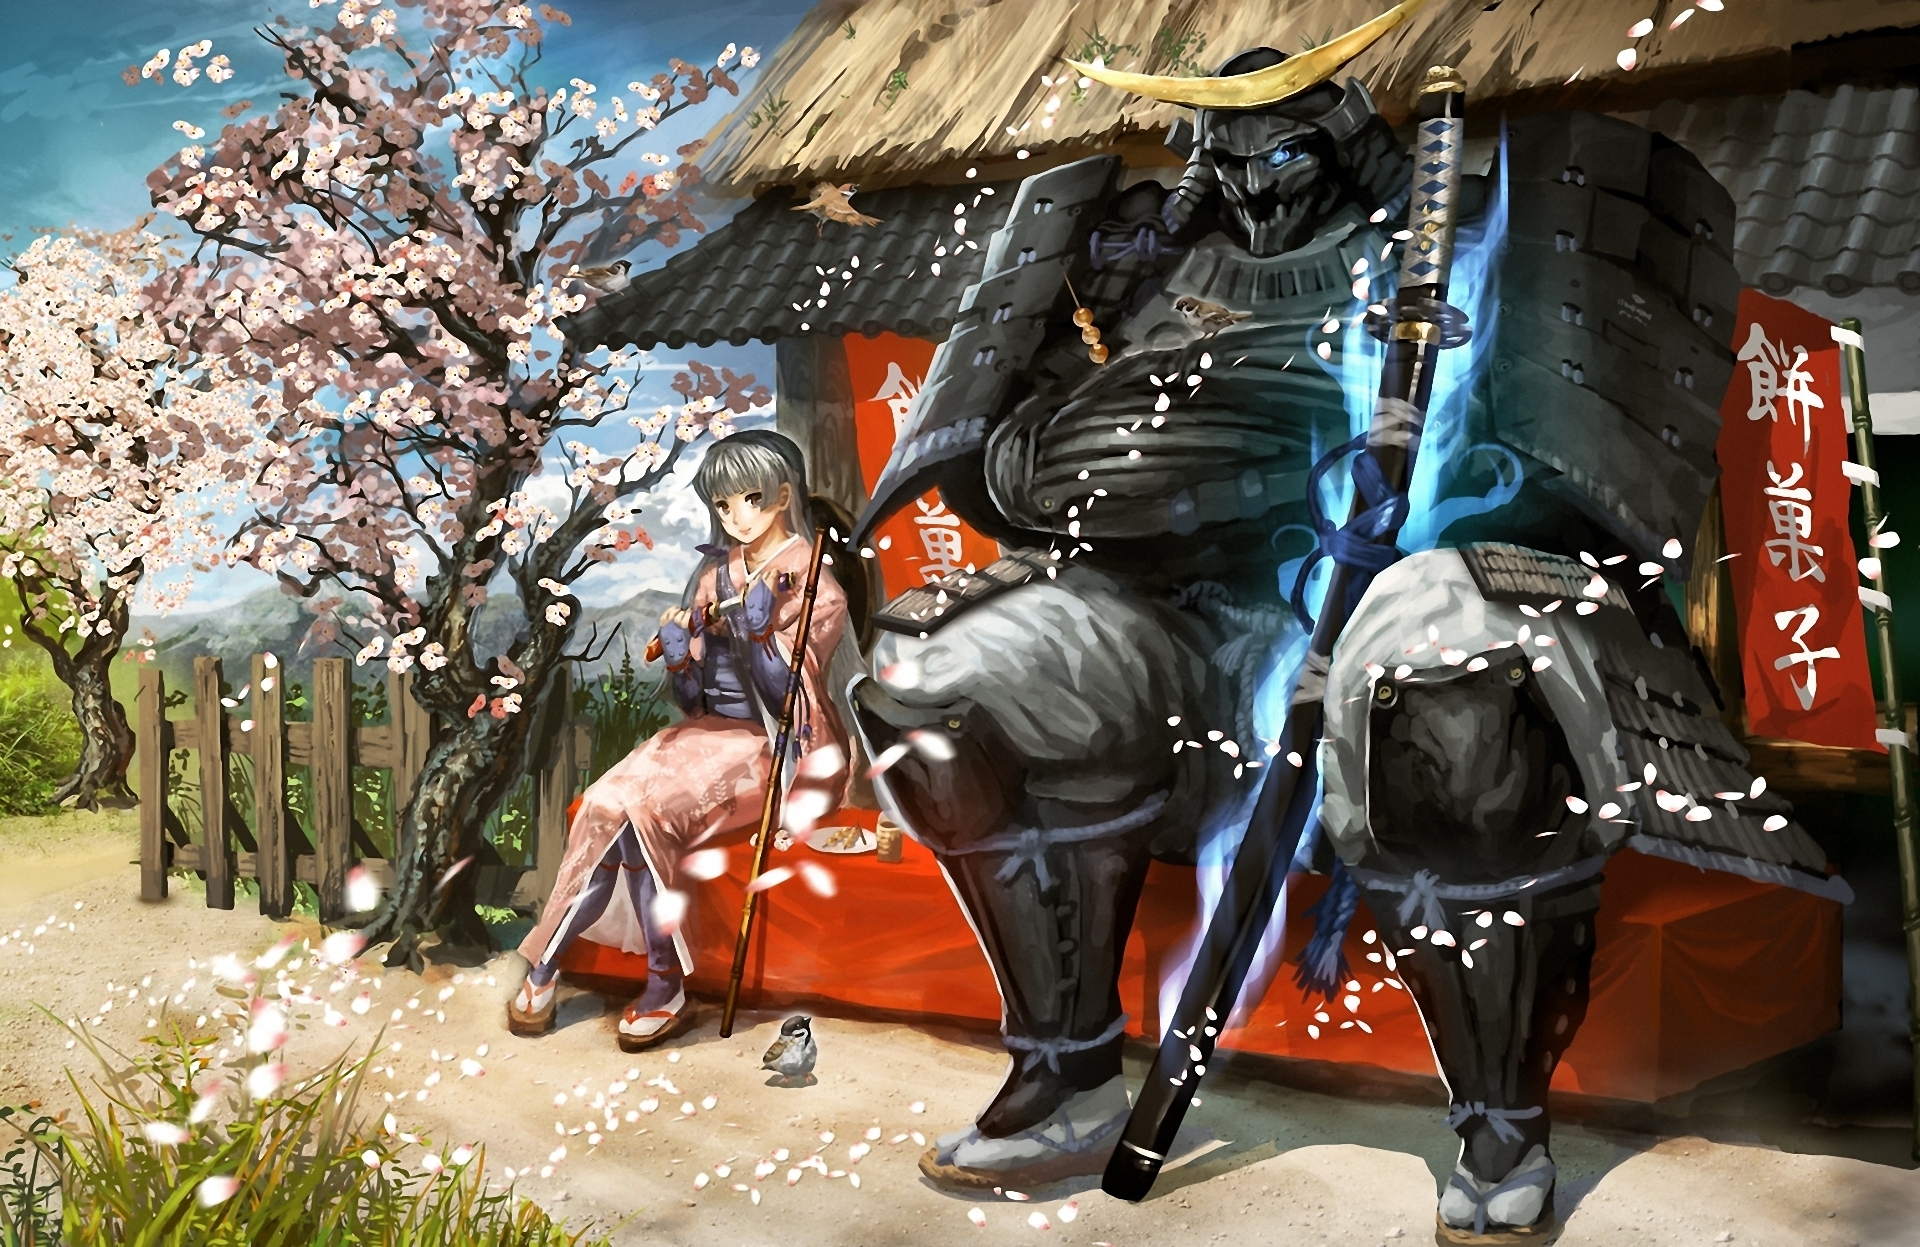 209336 descargar imagen animado, samurai, espada: fondos de pantalla y protectores de pantalla gratis